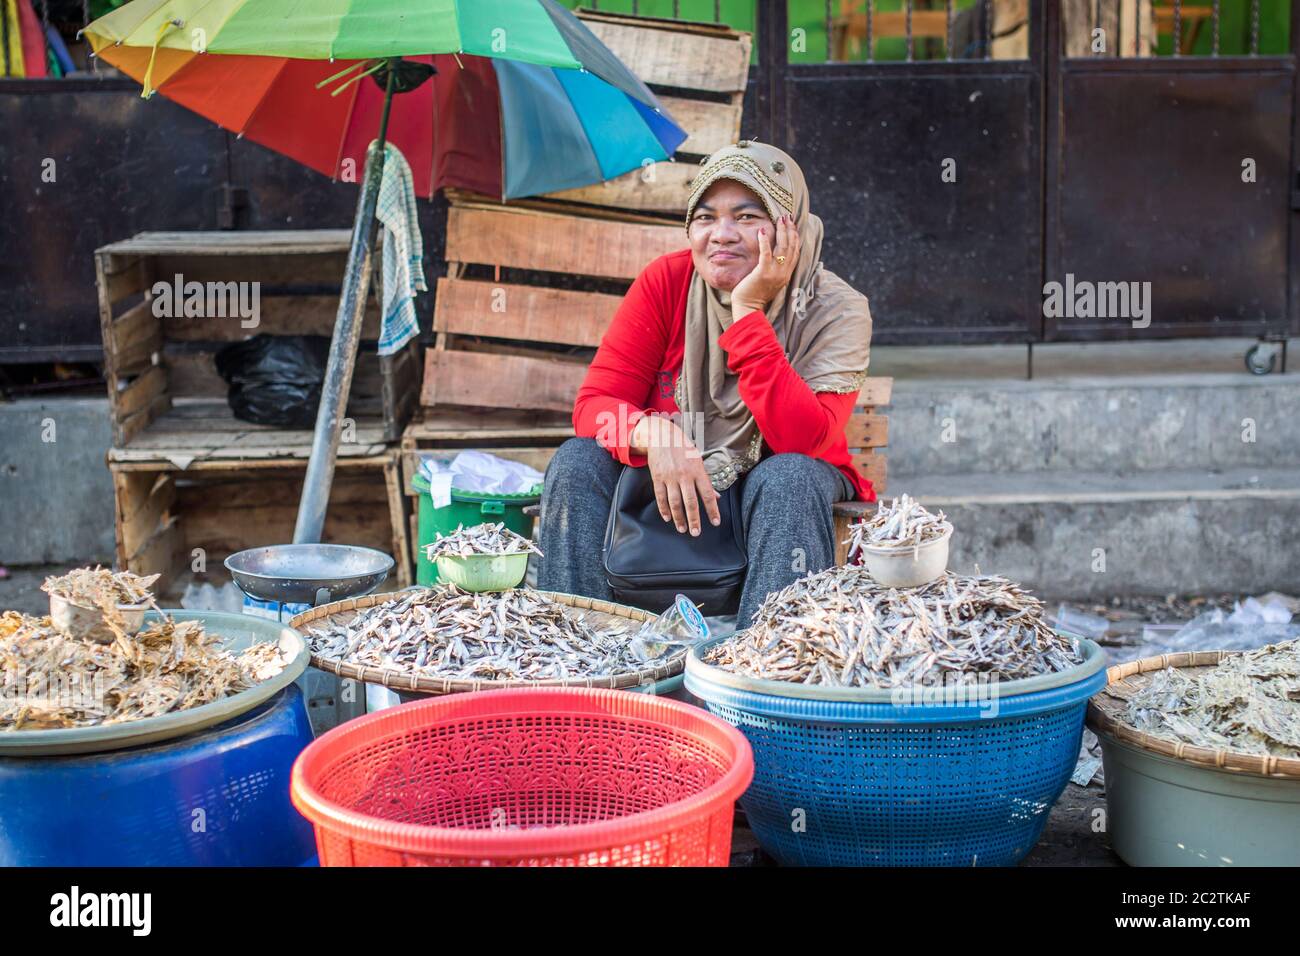 Sumbawa ,Indonesia - 24 agosto 2017: Persone al mercato locale a Sumbawa Besar, Indonesia. Foto Stock